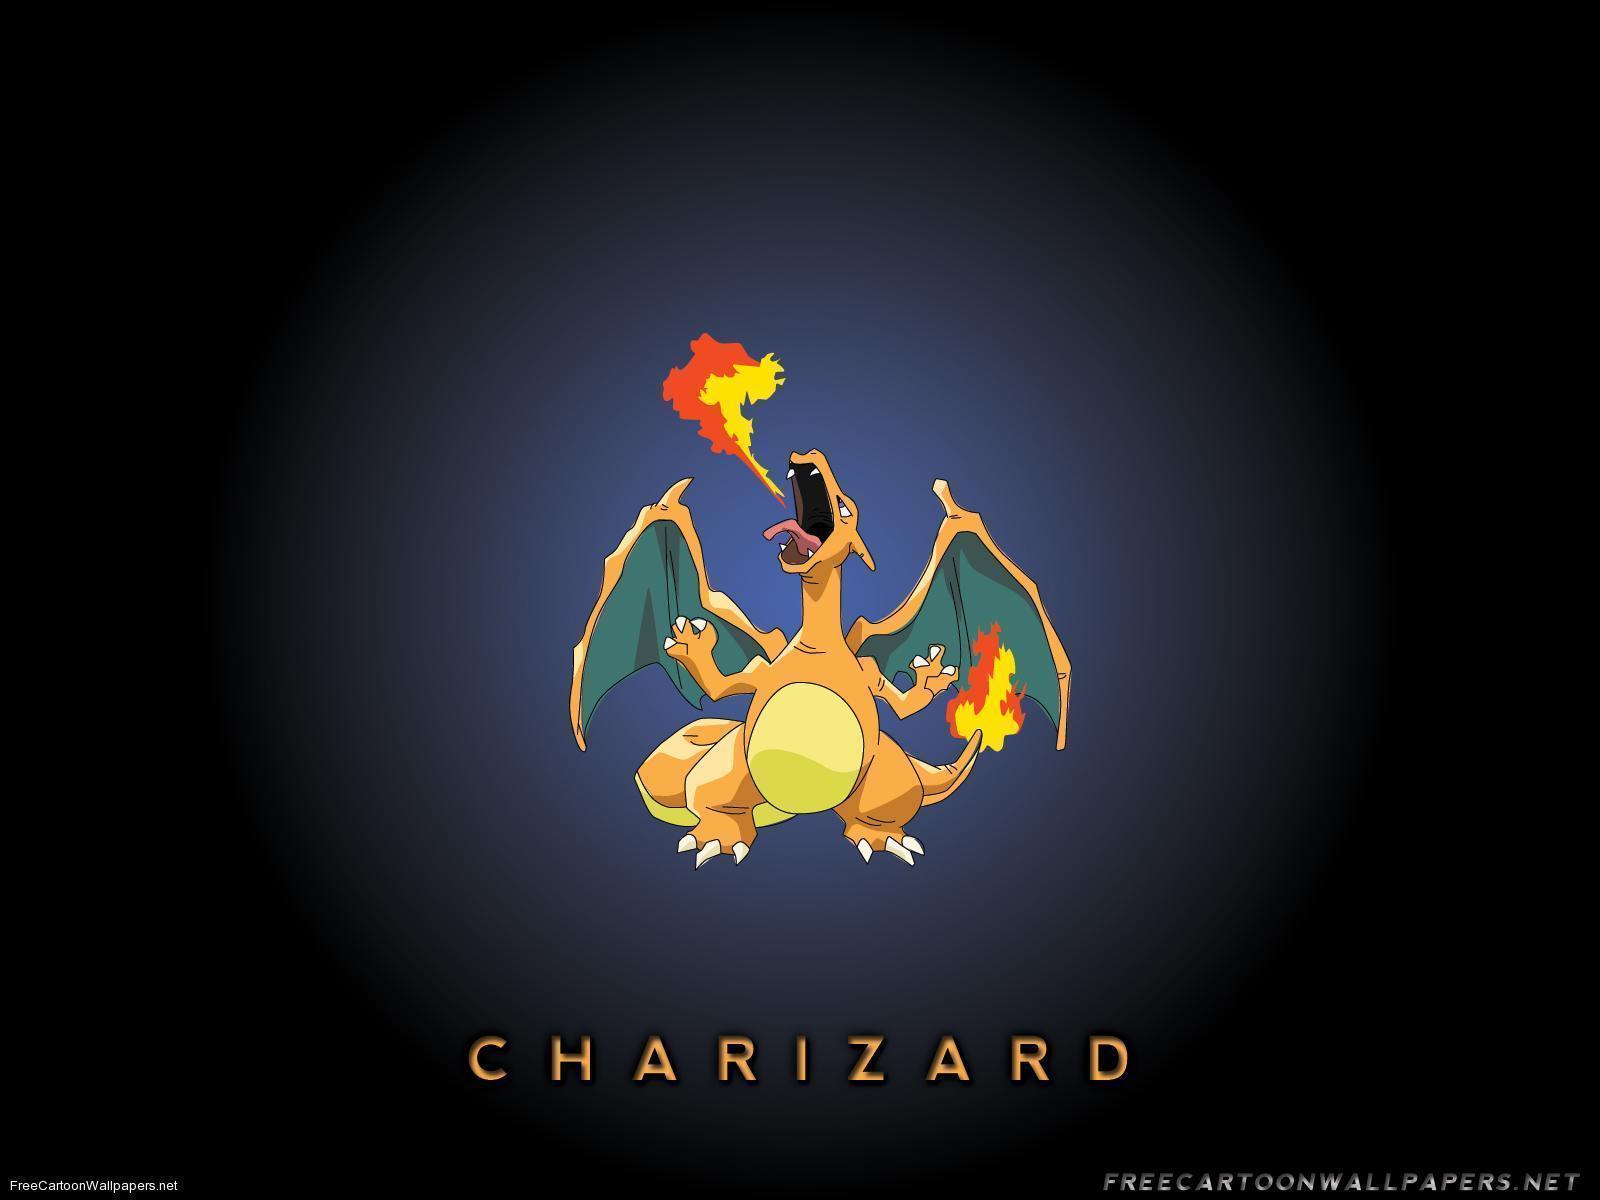 Charizard Pokemon Wallpaper Minimalistic Wallpaper 1920x1080PX